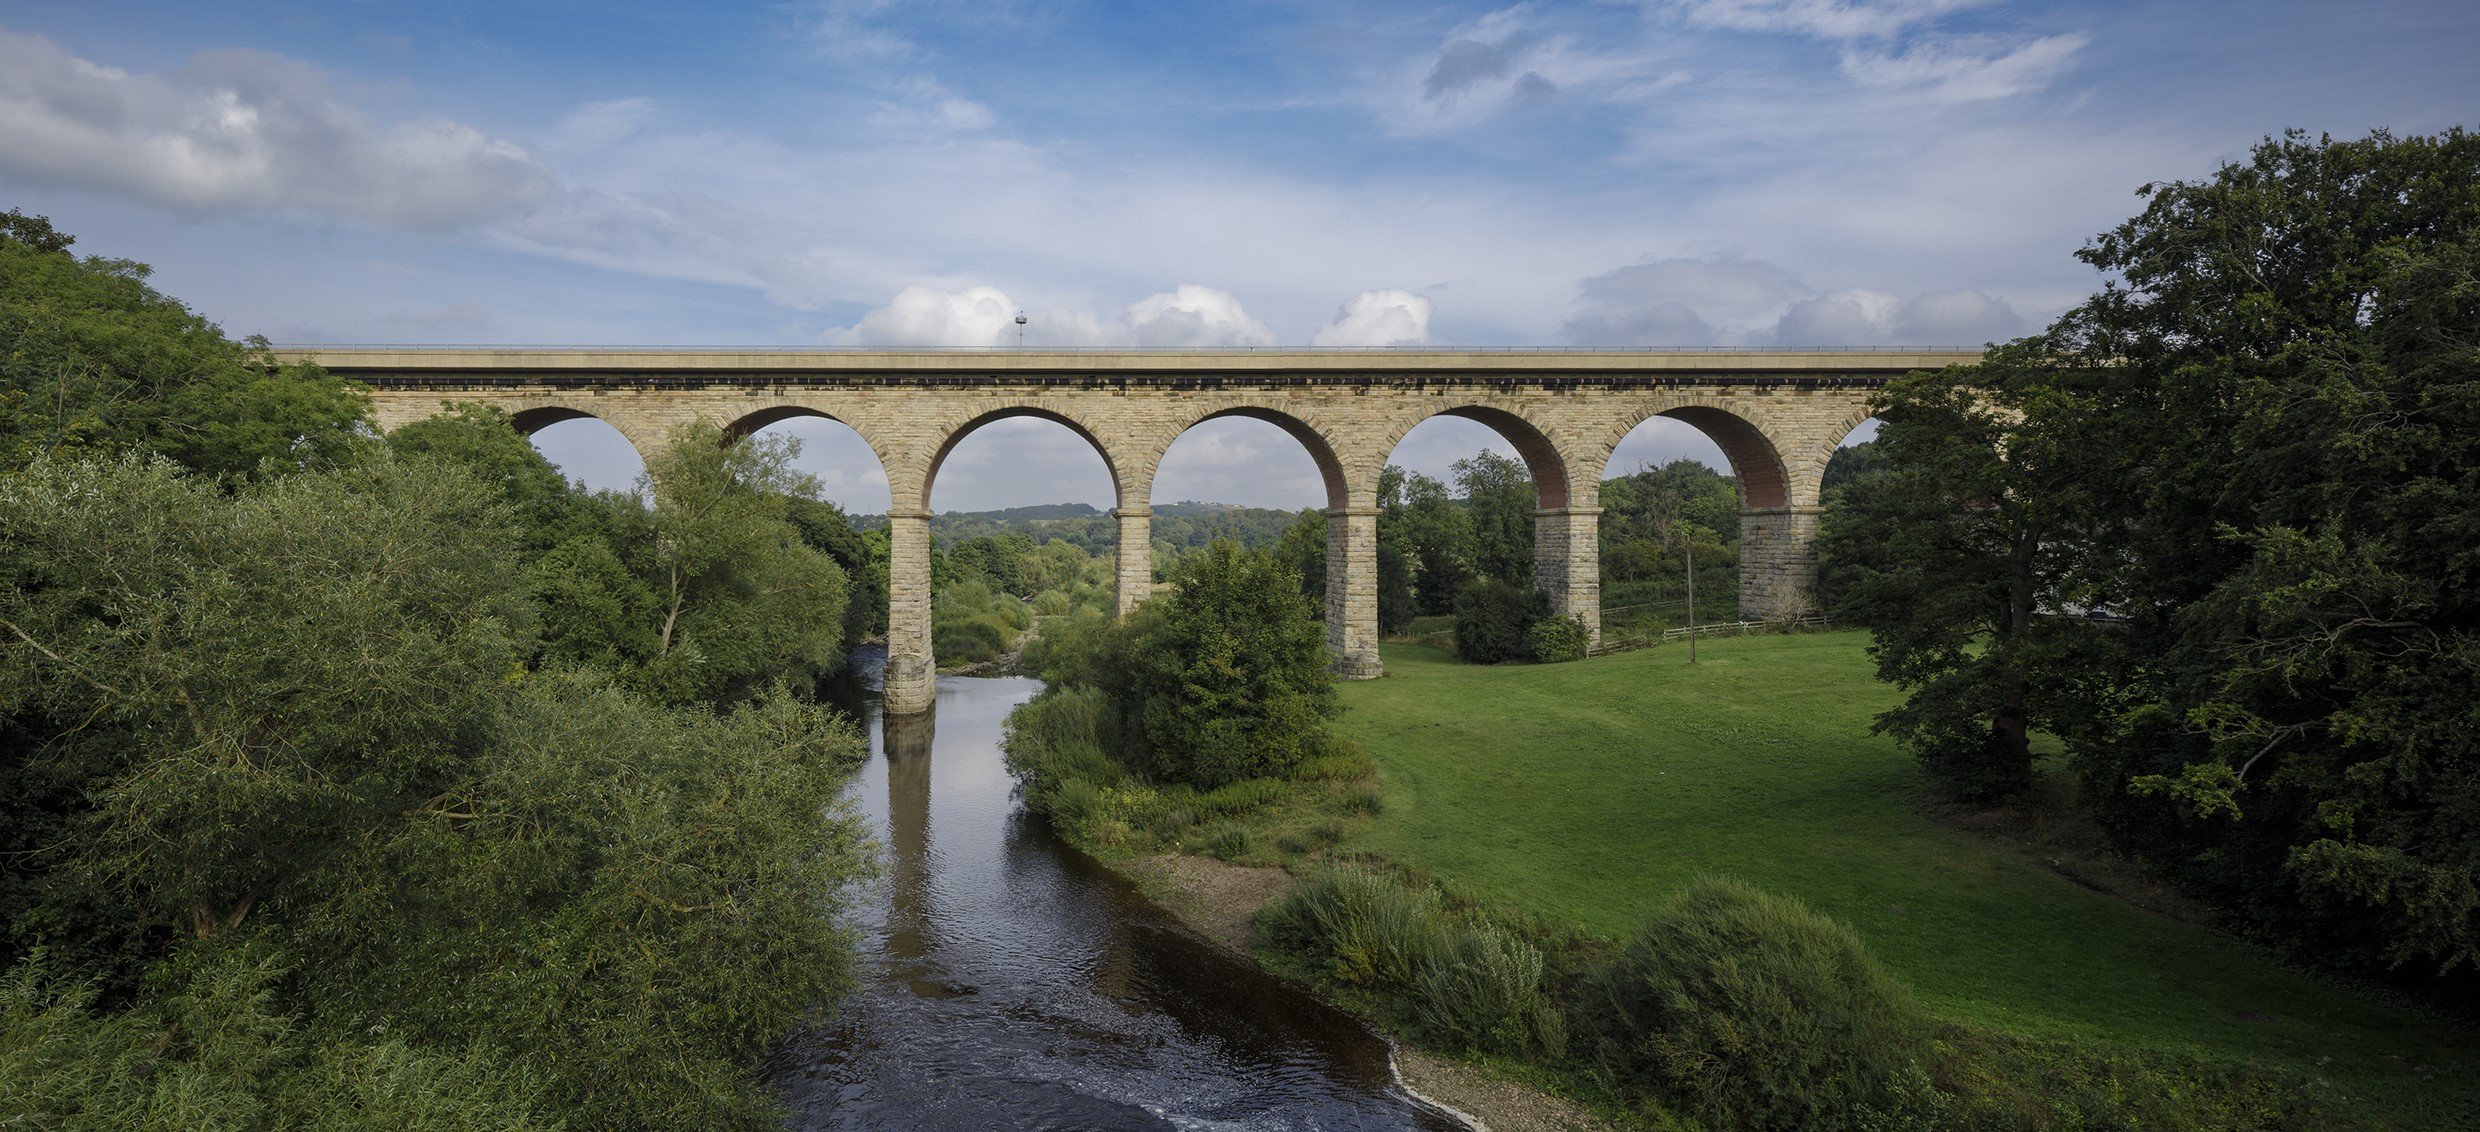 A multi-arched bridge spanning a river